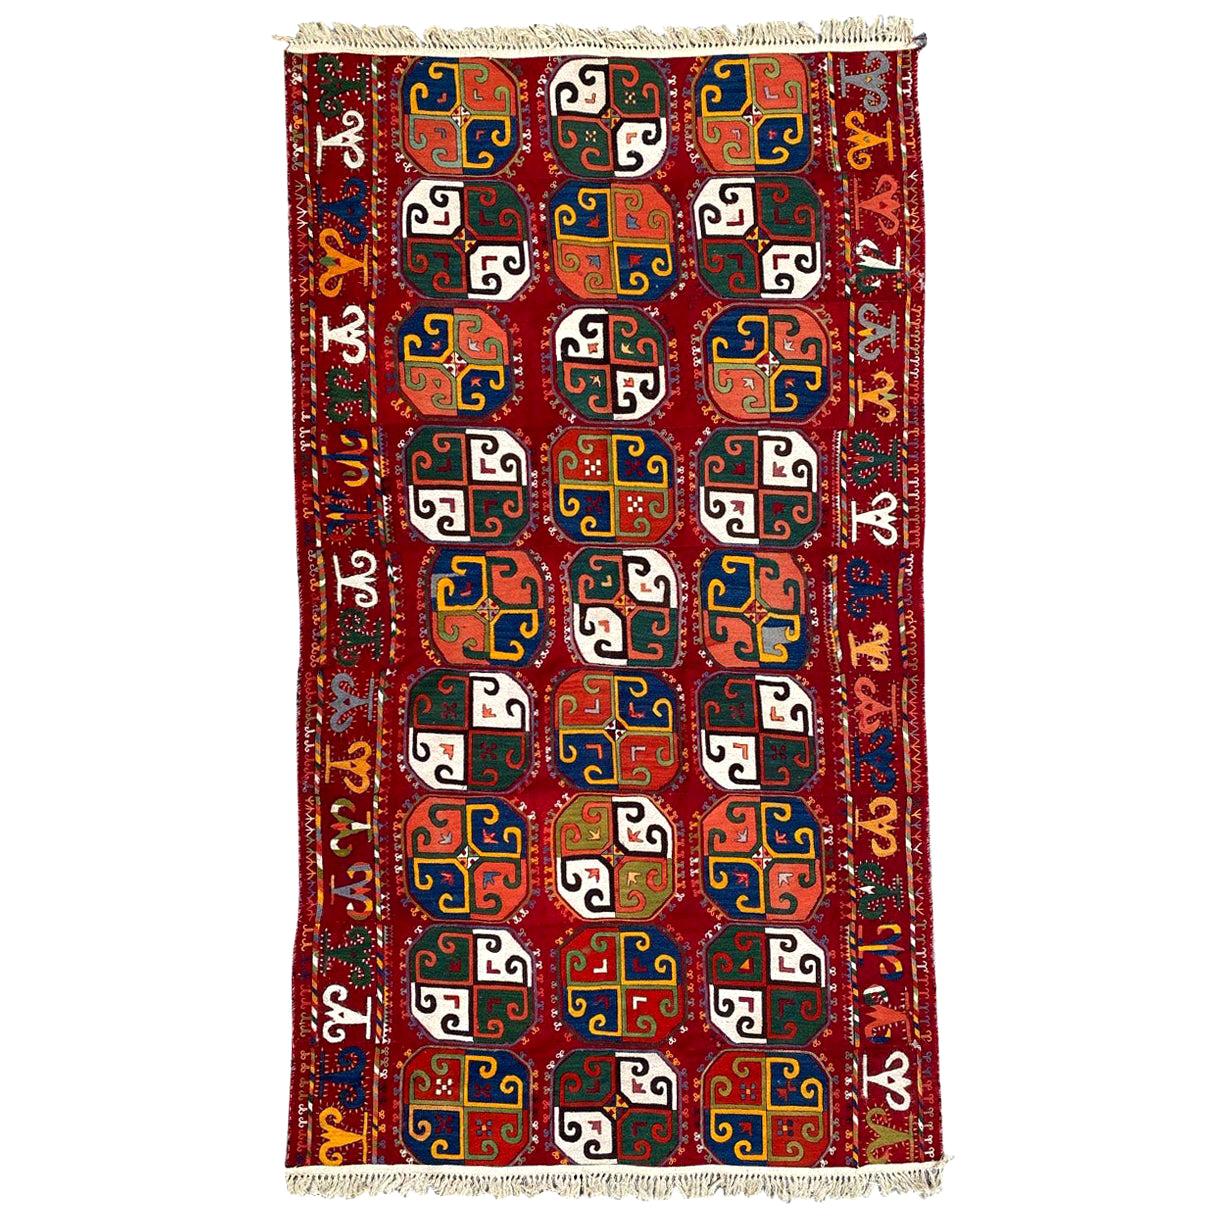 Bobyrug’s Wonderful Antique Uzbek Woven and Embroidered Panel